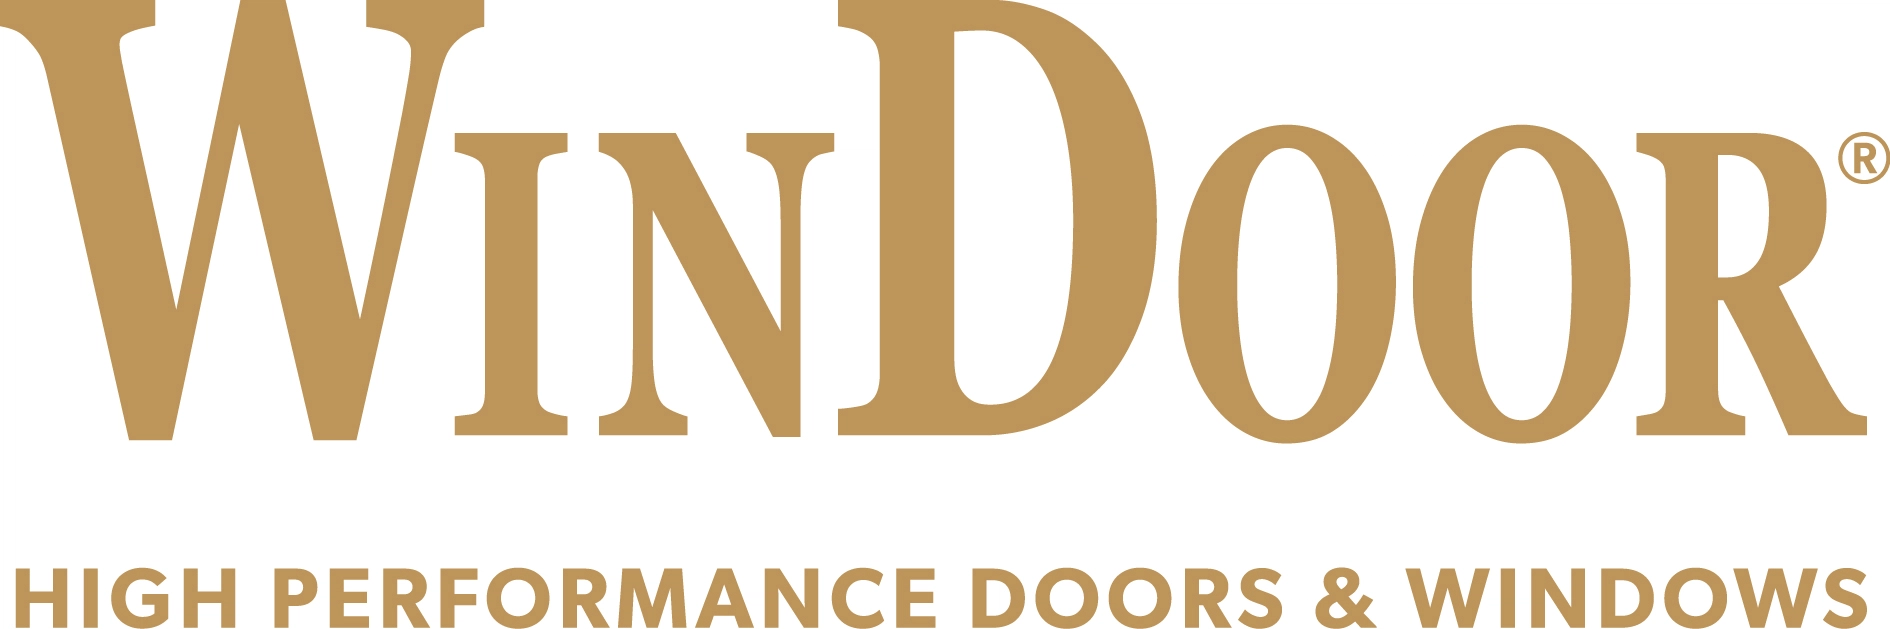 JMI Windows & Doors Logo